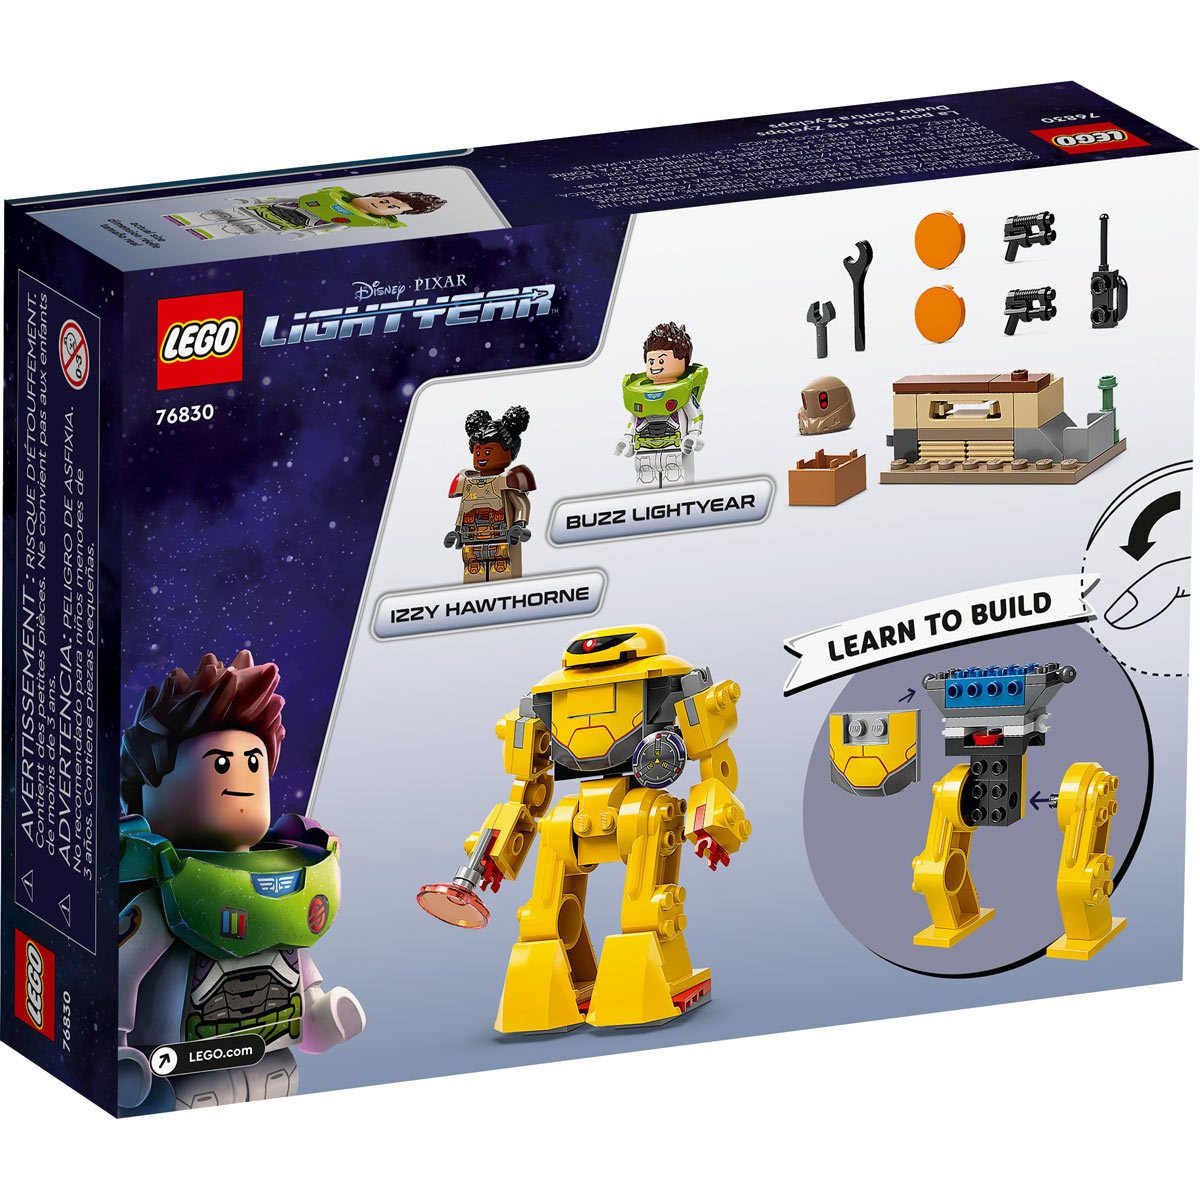 Pixar\'s Disney LEGO Chase Lightyear Zyclops and 76830